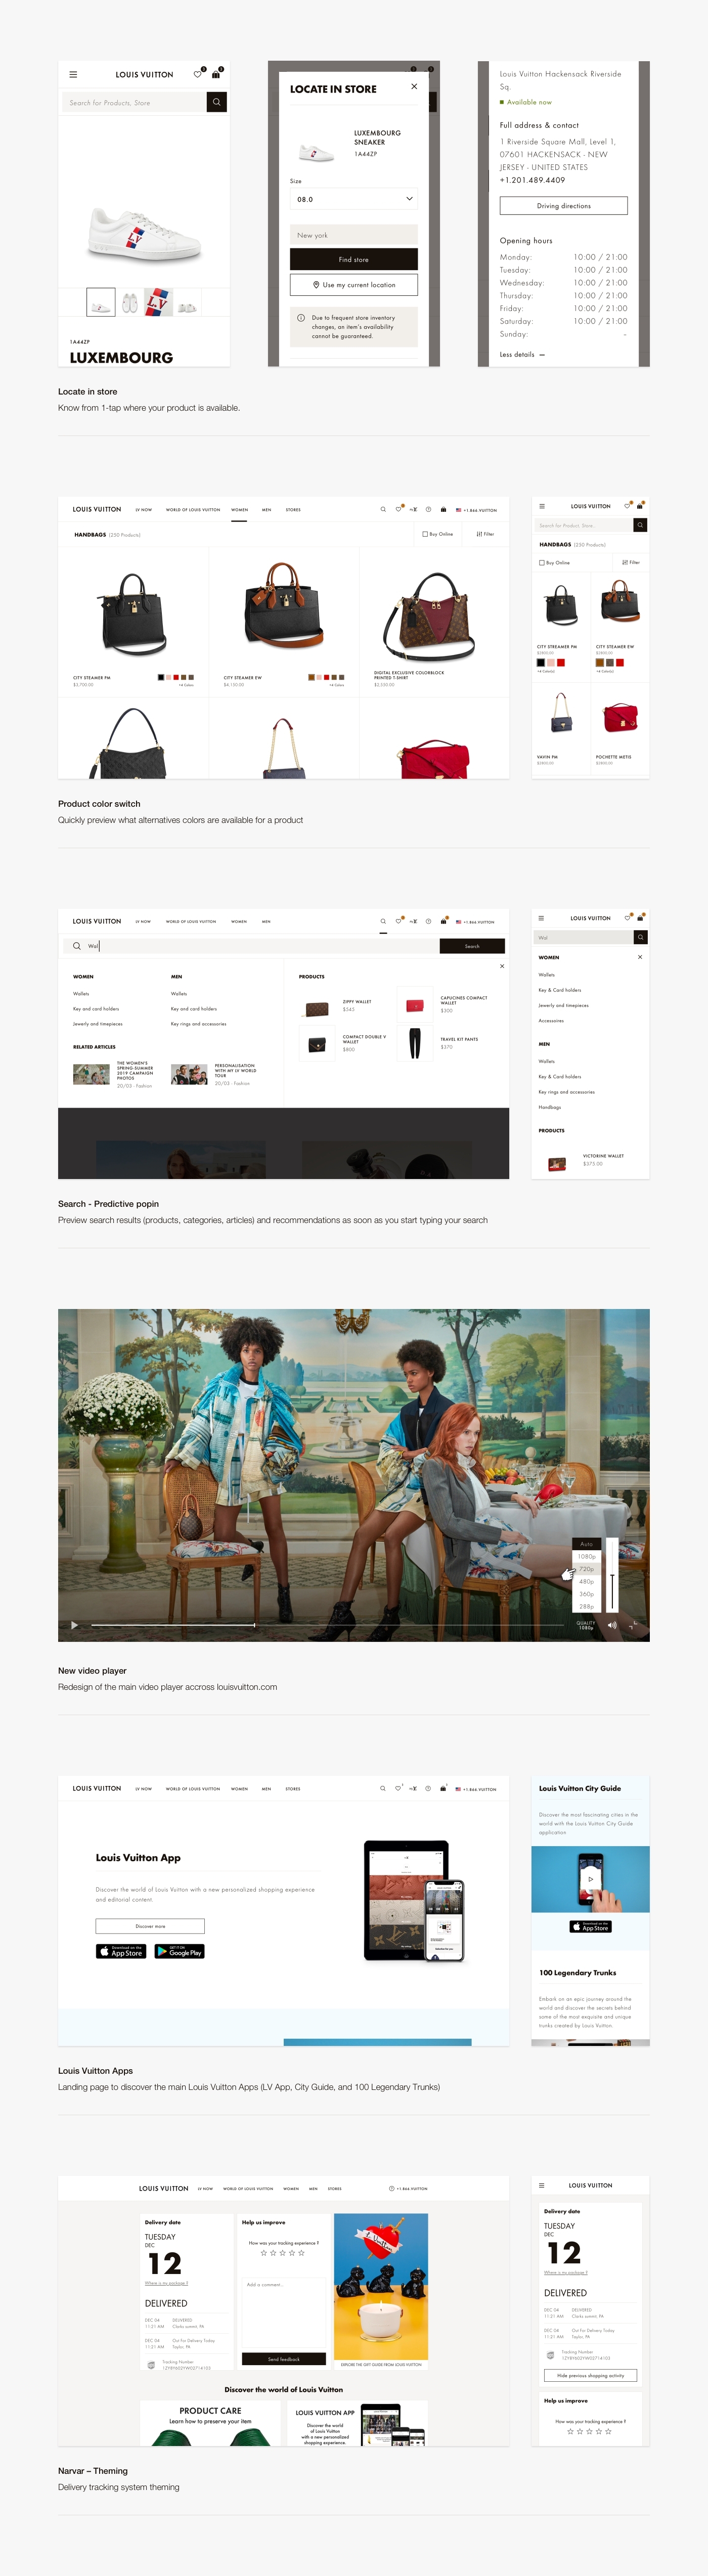 Digital Art Direction, UI Design and UX Design: Louis Vuitton Revamp by  Emmanuel